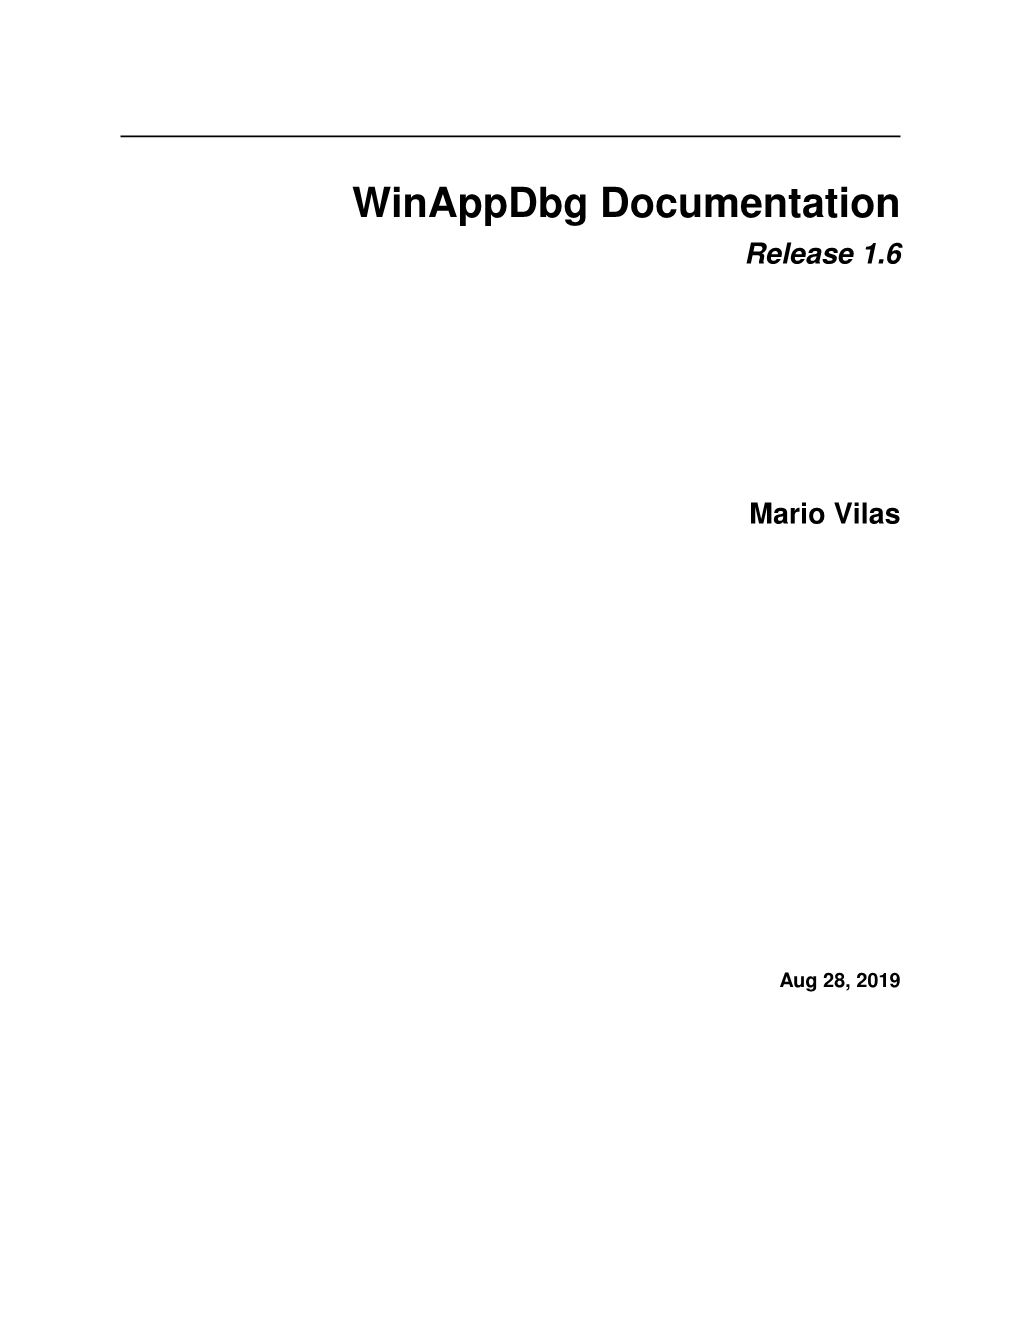 Winappdbg Documentation Release 1.6